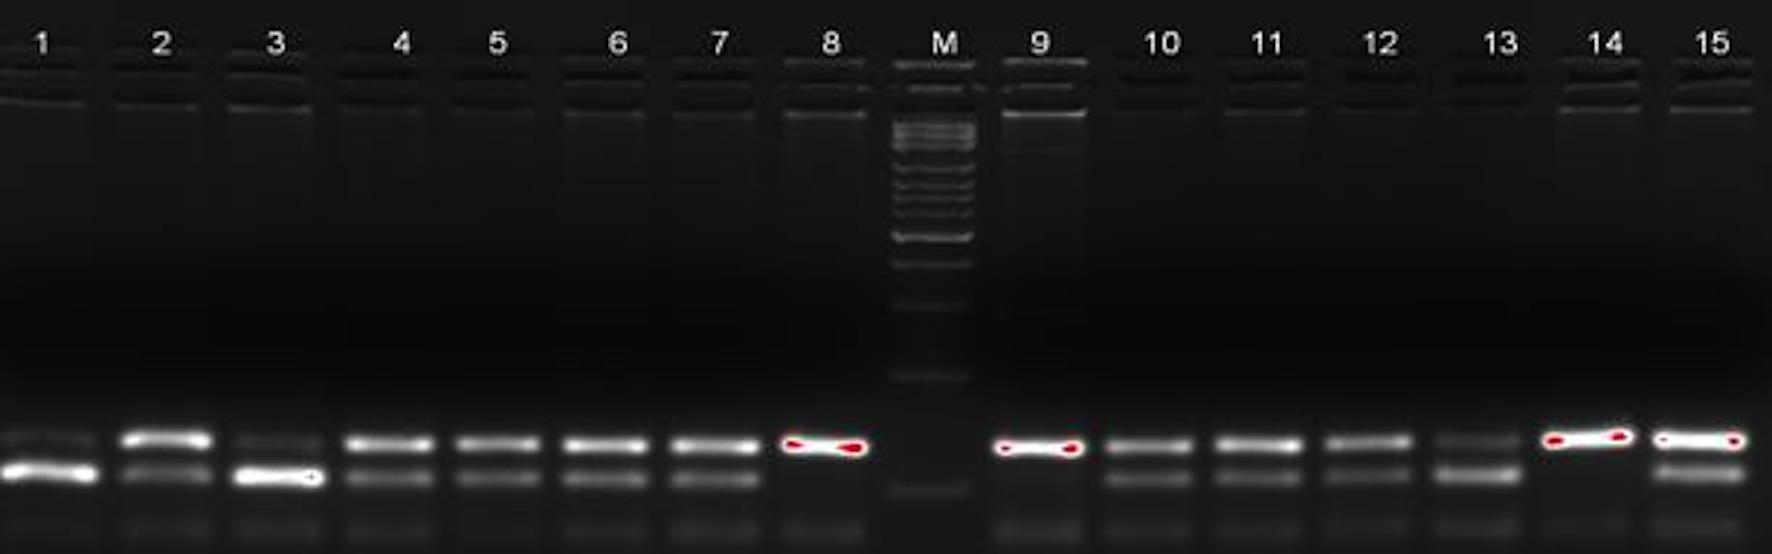 IL28B rs12979860 C/T polymorphism agarose gel image